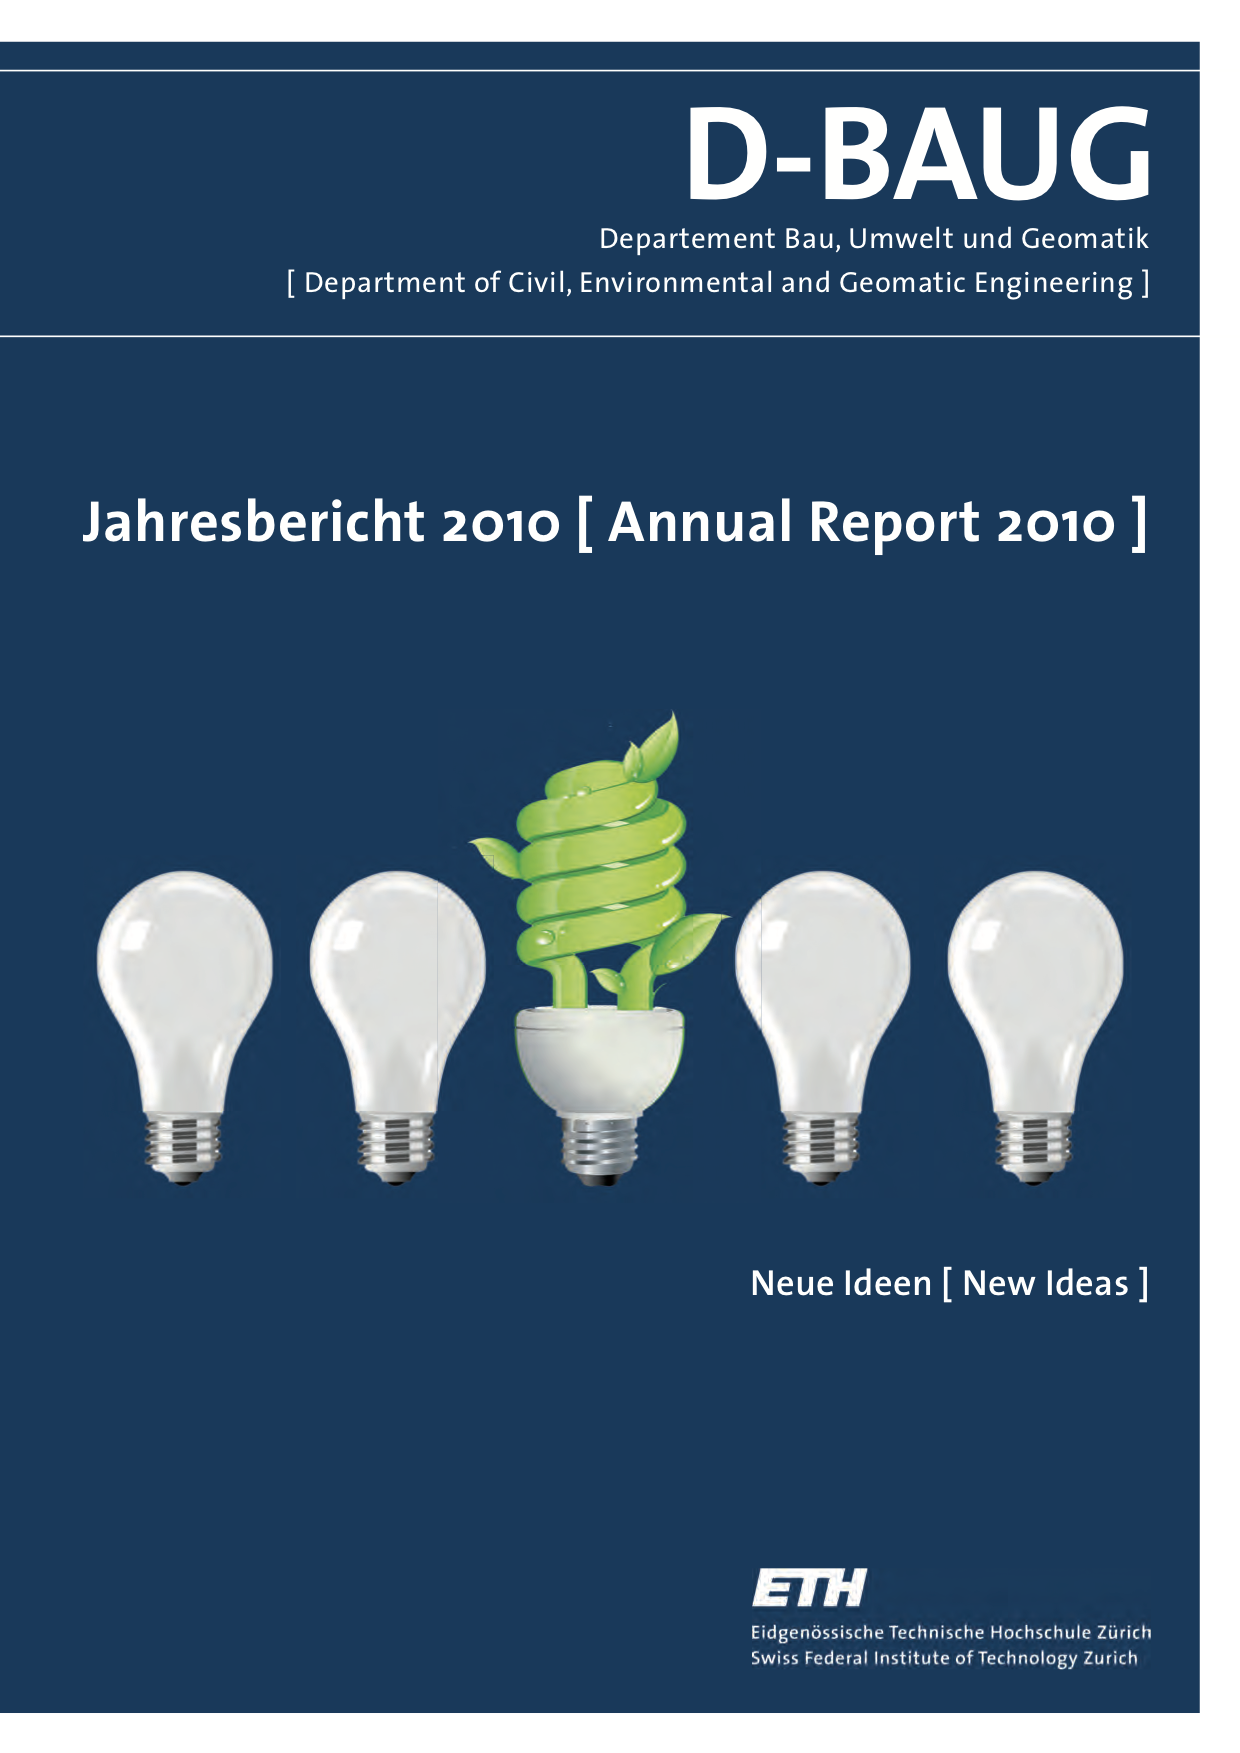 D-BAUG Jahresbericht 2010